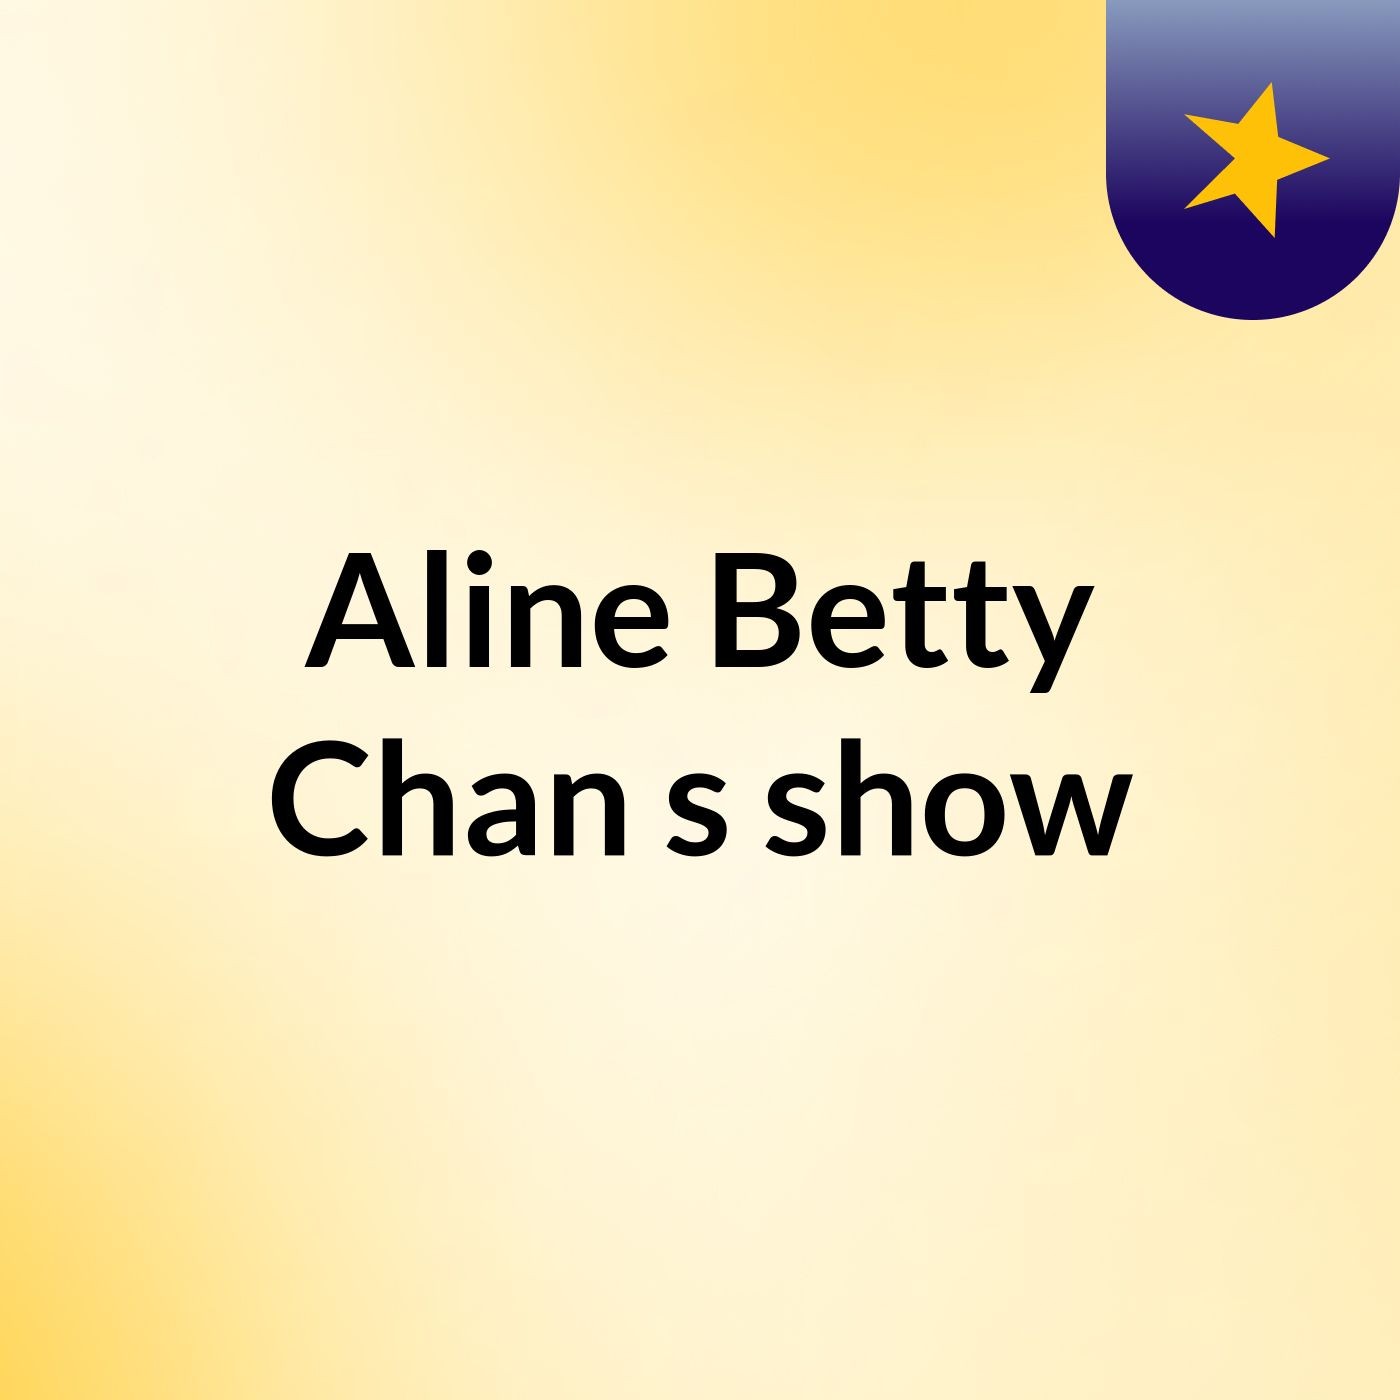 Aline Betty Chan's show